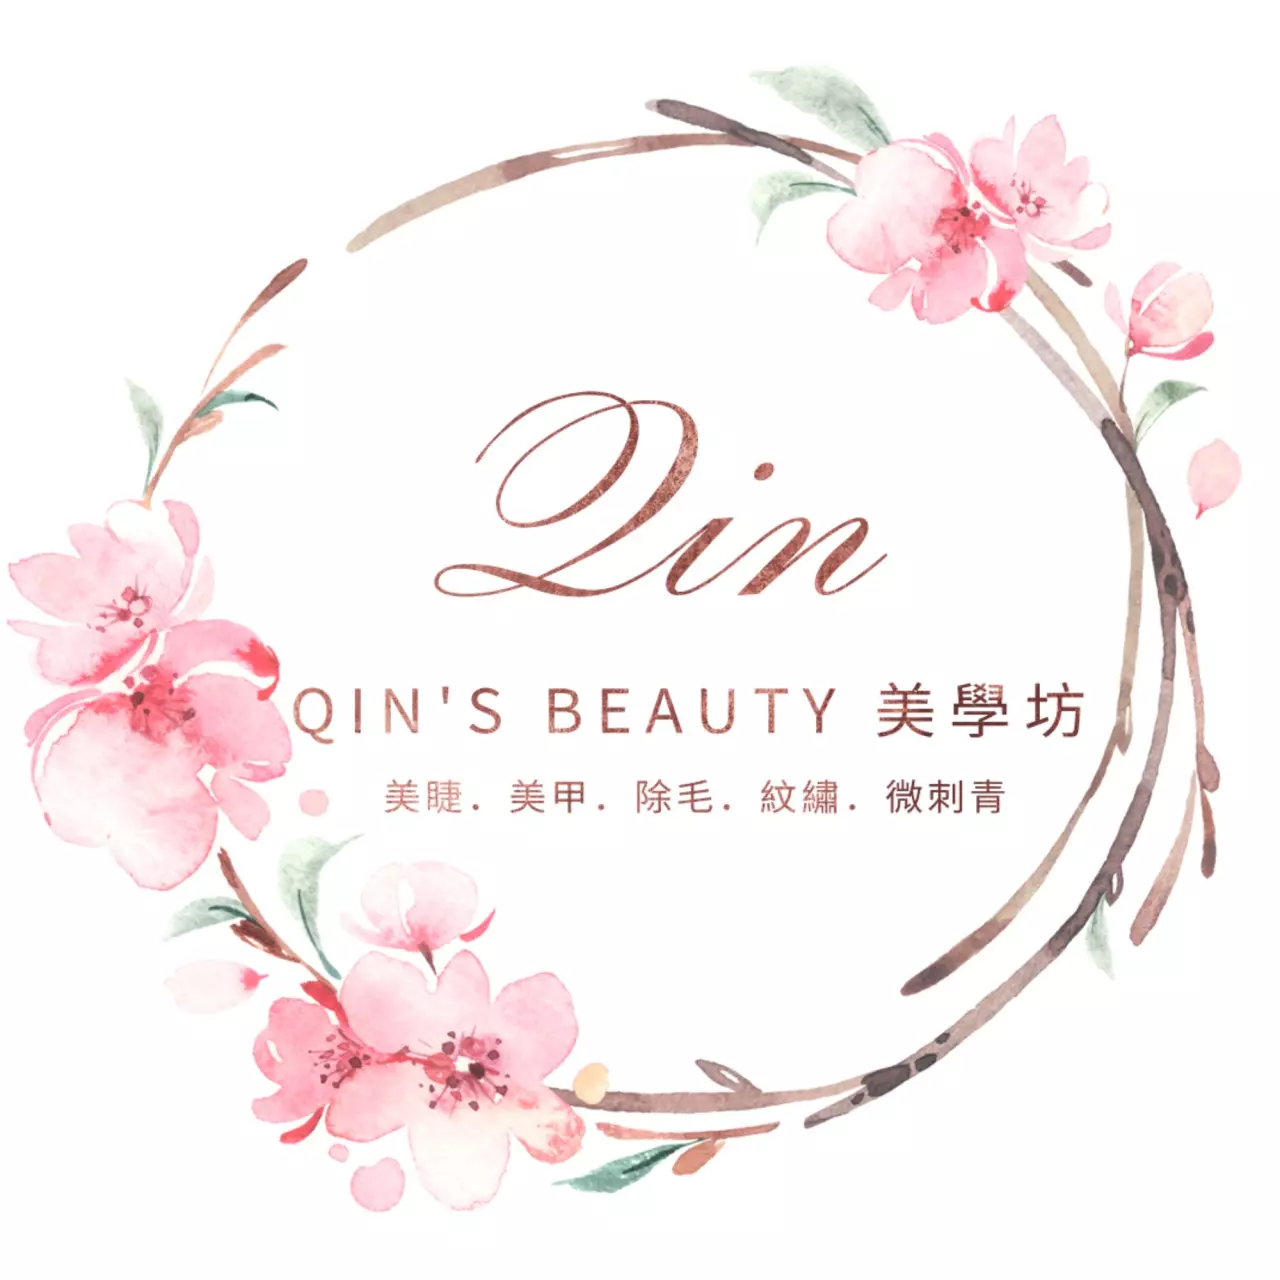 Qin’s Beauty 沁安時尚美學 x 豐傑特約免費美容